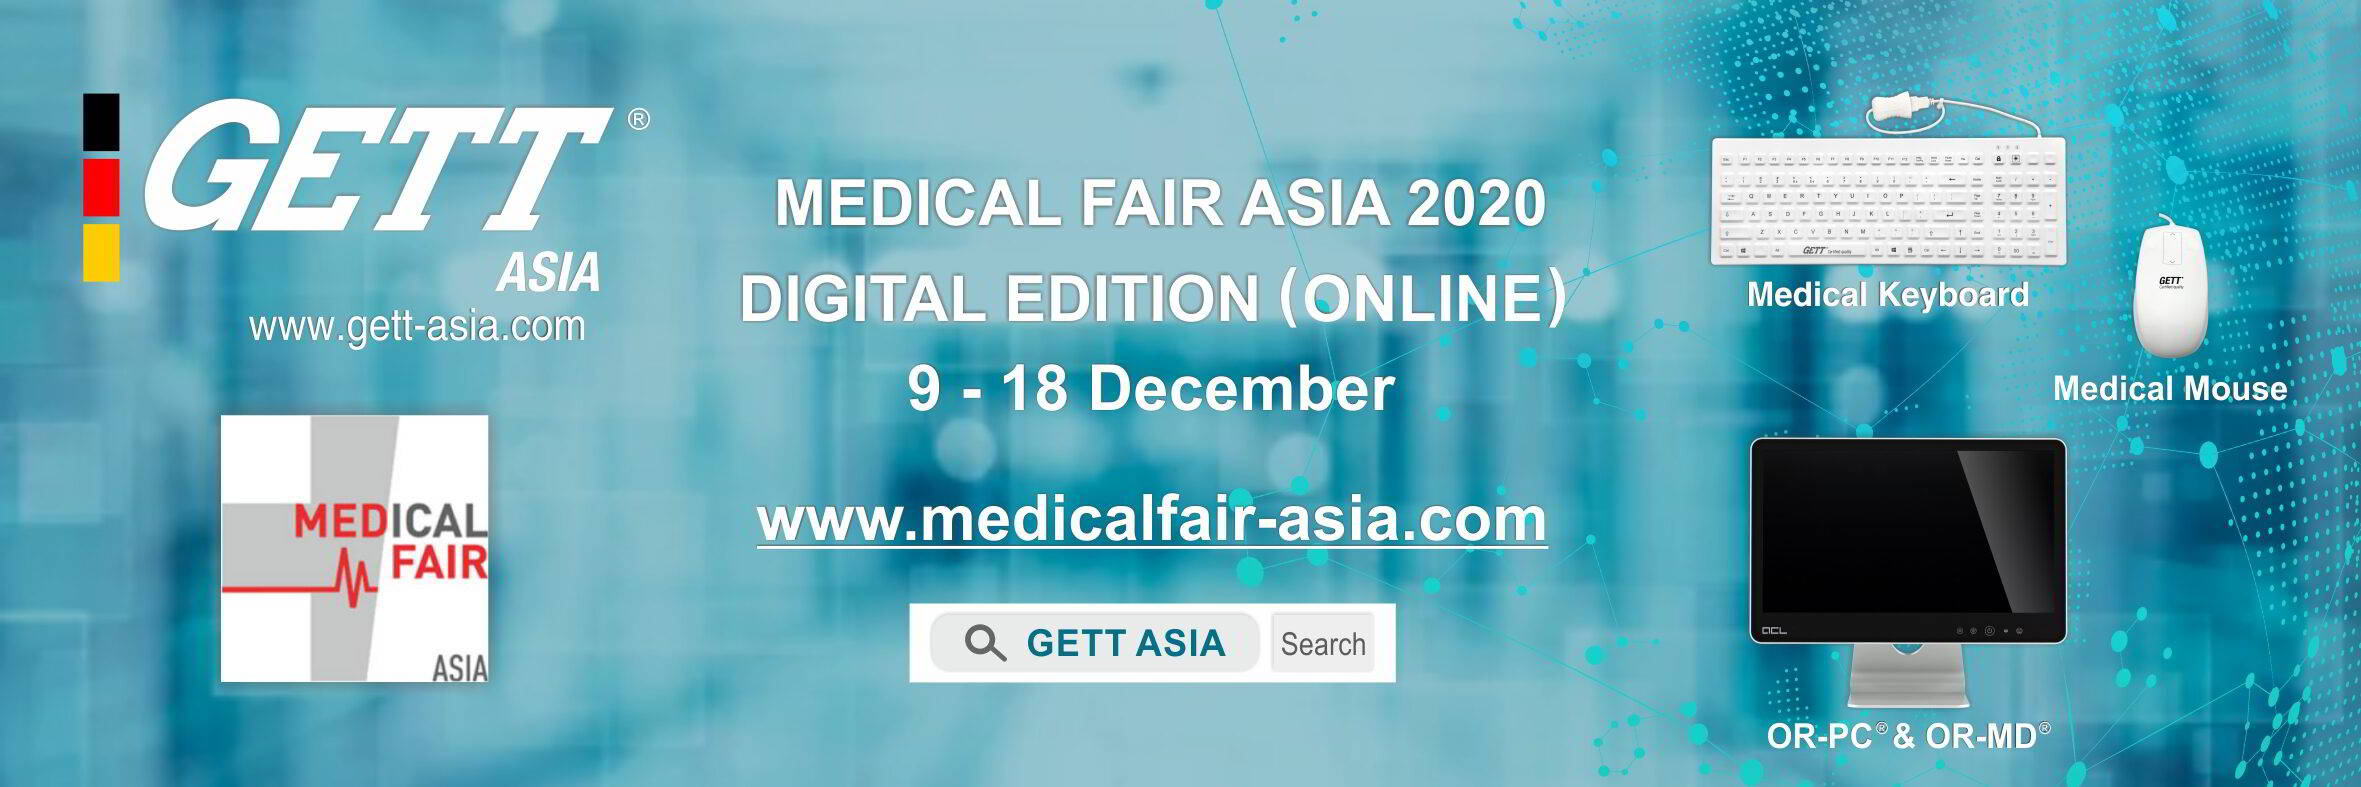 Medical Fair Asia 2020 (Digital Edition)